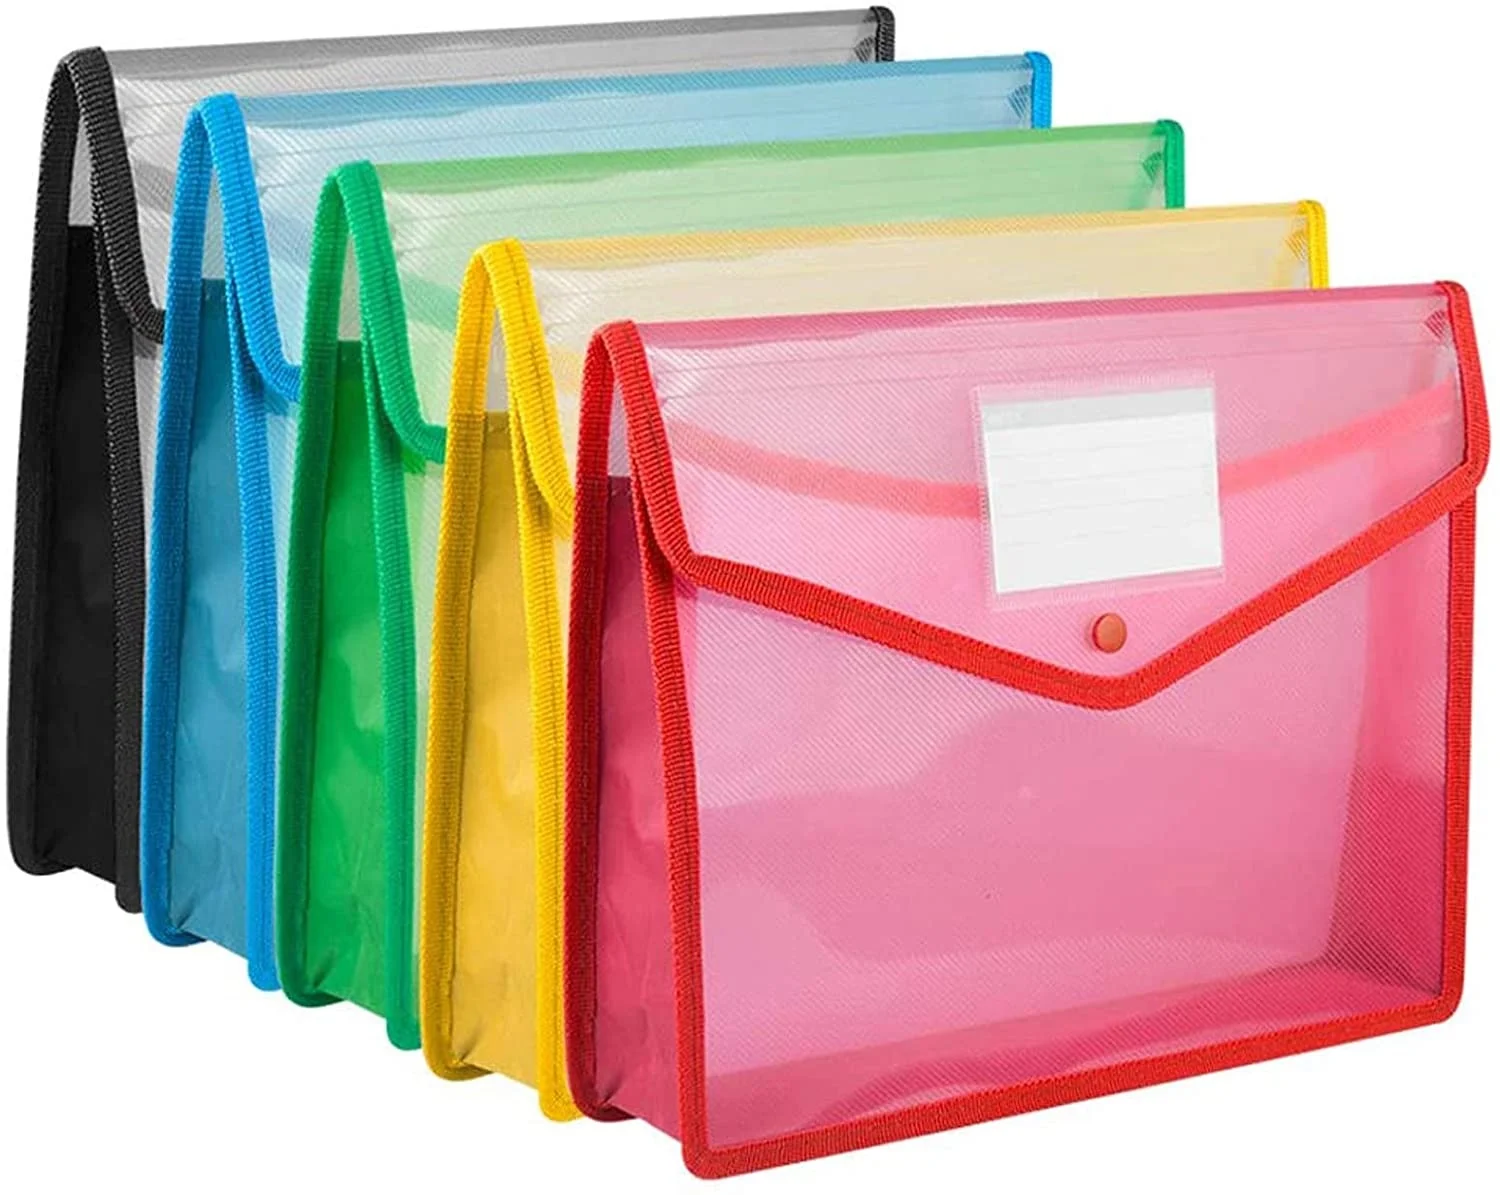 5 Pcs Plastic Folders A4 Popper Wallet Document Folder Pockets Envelopes with Snap Closure Expanding File Folder for Home School Office A4 Plastic Wallets 